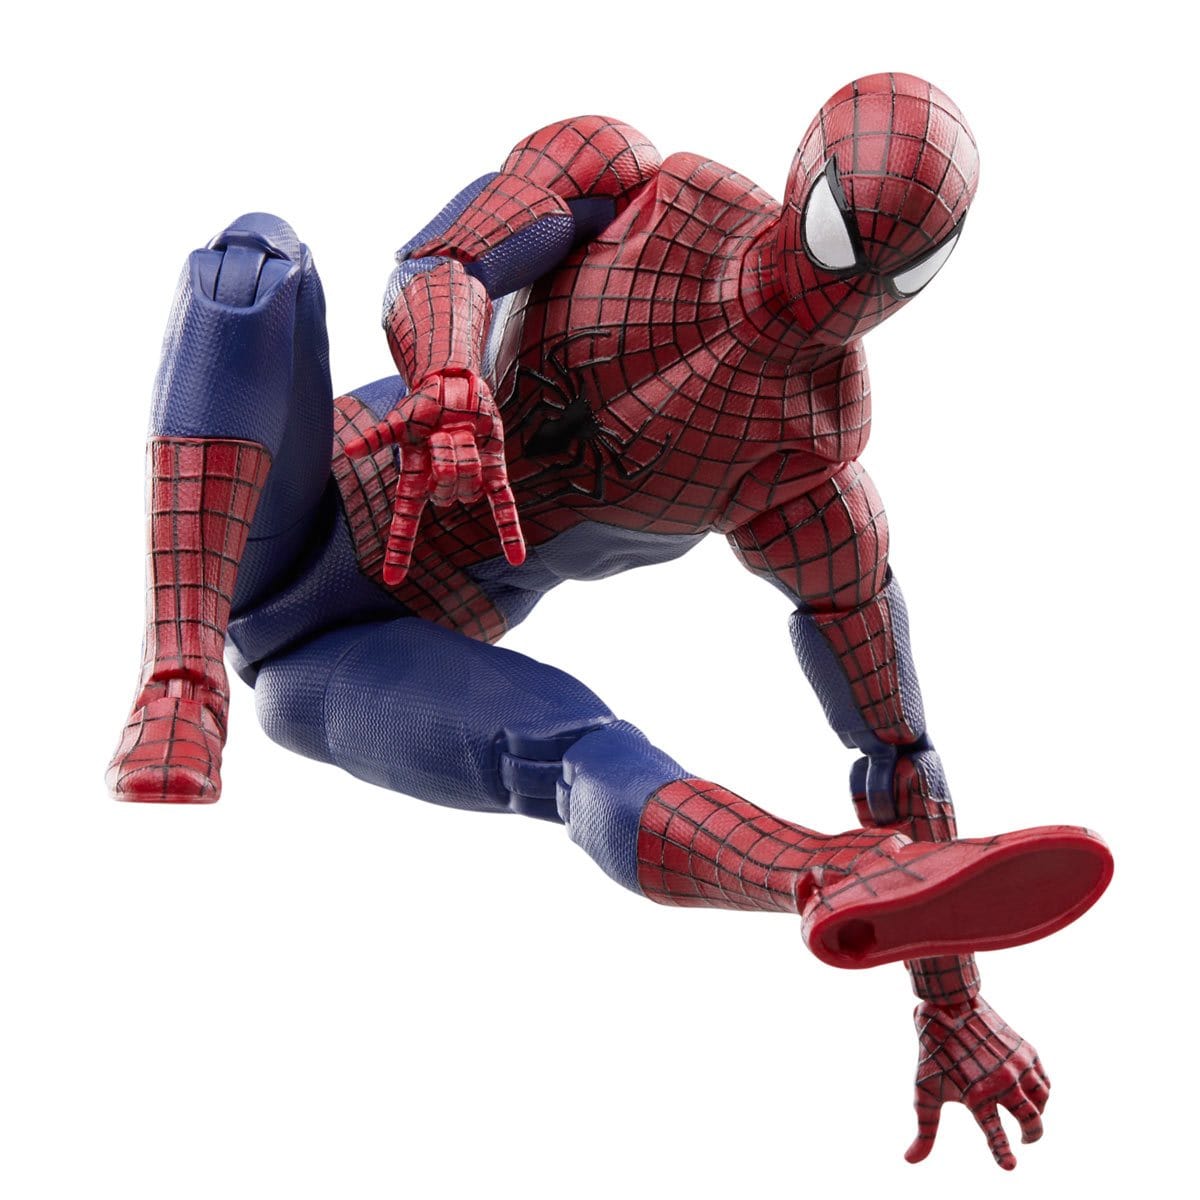 Funkoinfo_ on Instagram: Up close look at Marvel Legends No Way Home  Spider-Man & Spider-Man 2 Doc Ock Figure! Credit: @Dunyunistrying  #spiderman #tomholland #doctoroctopus #marvel #marvelstudios